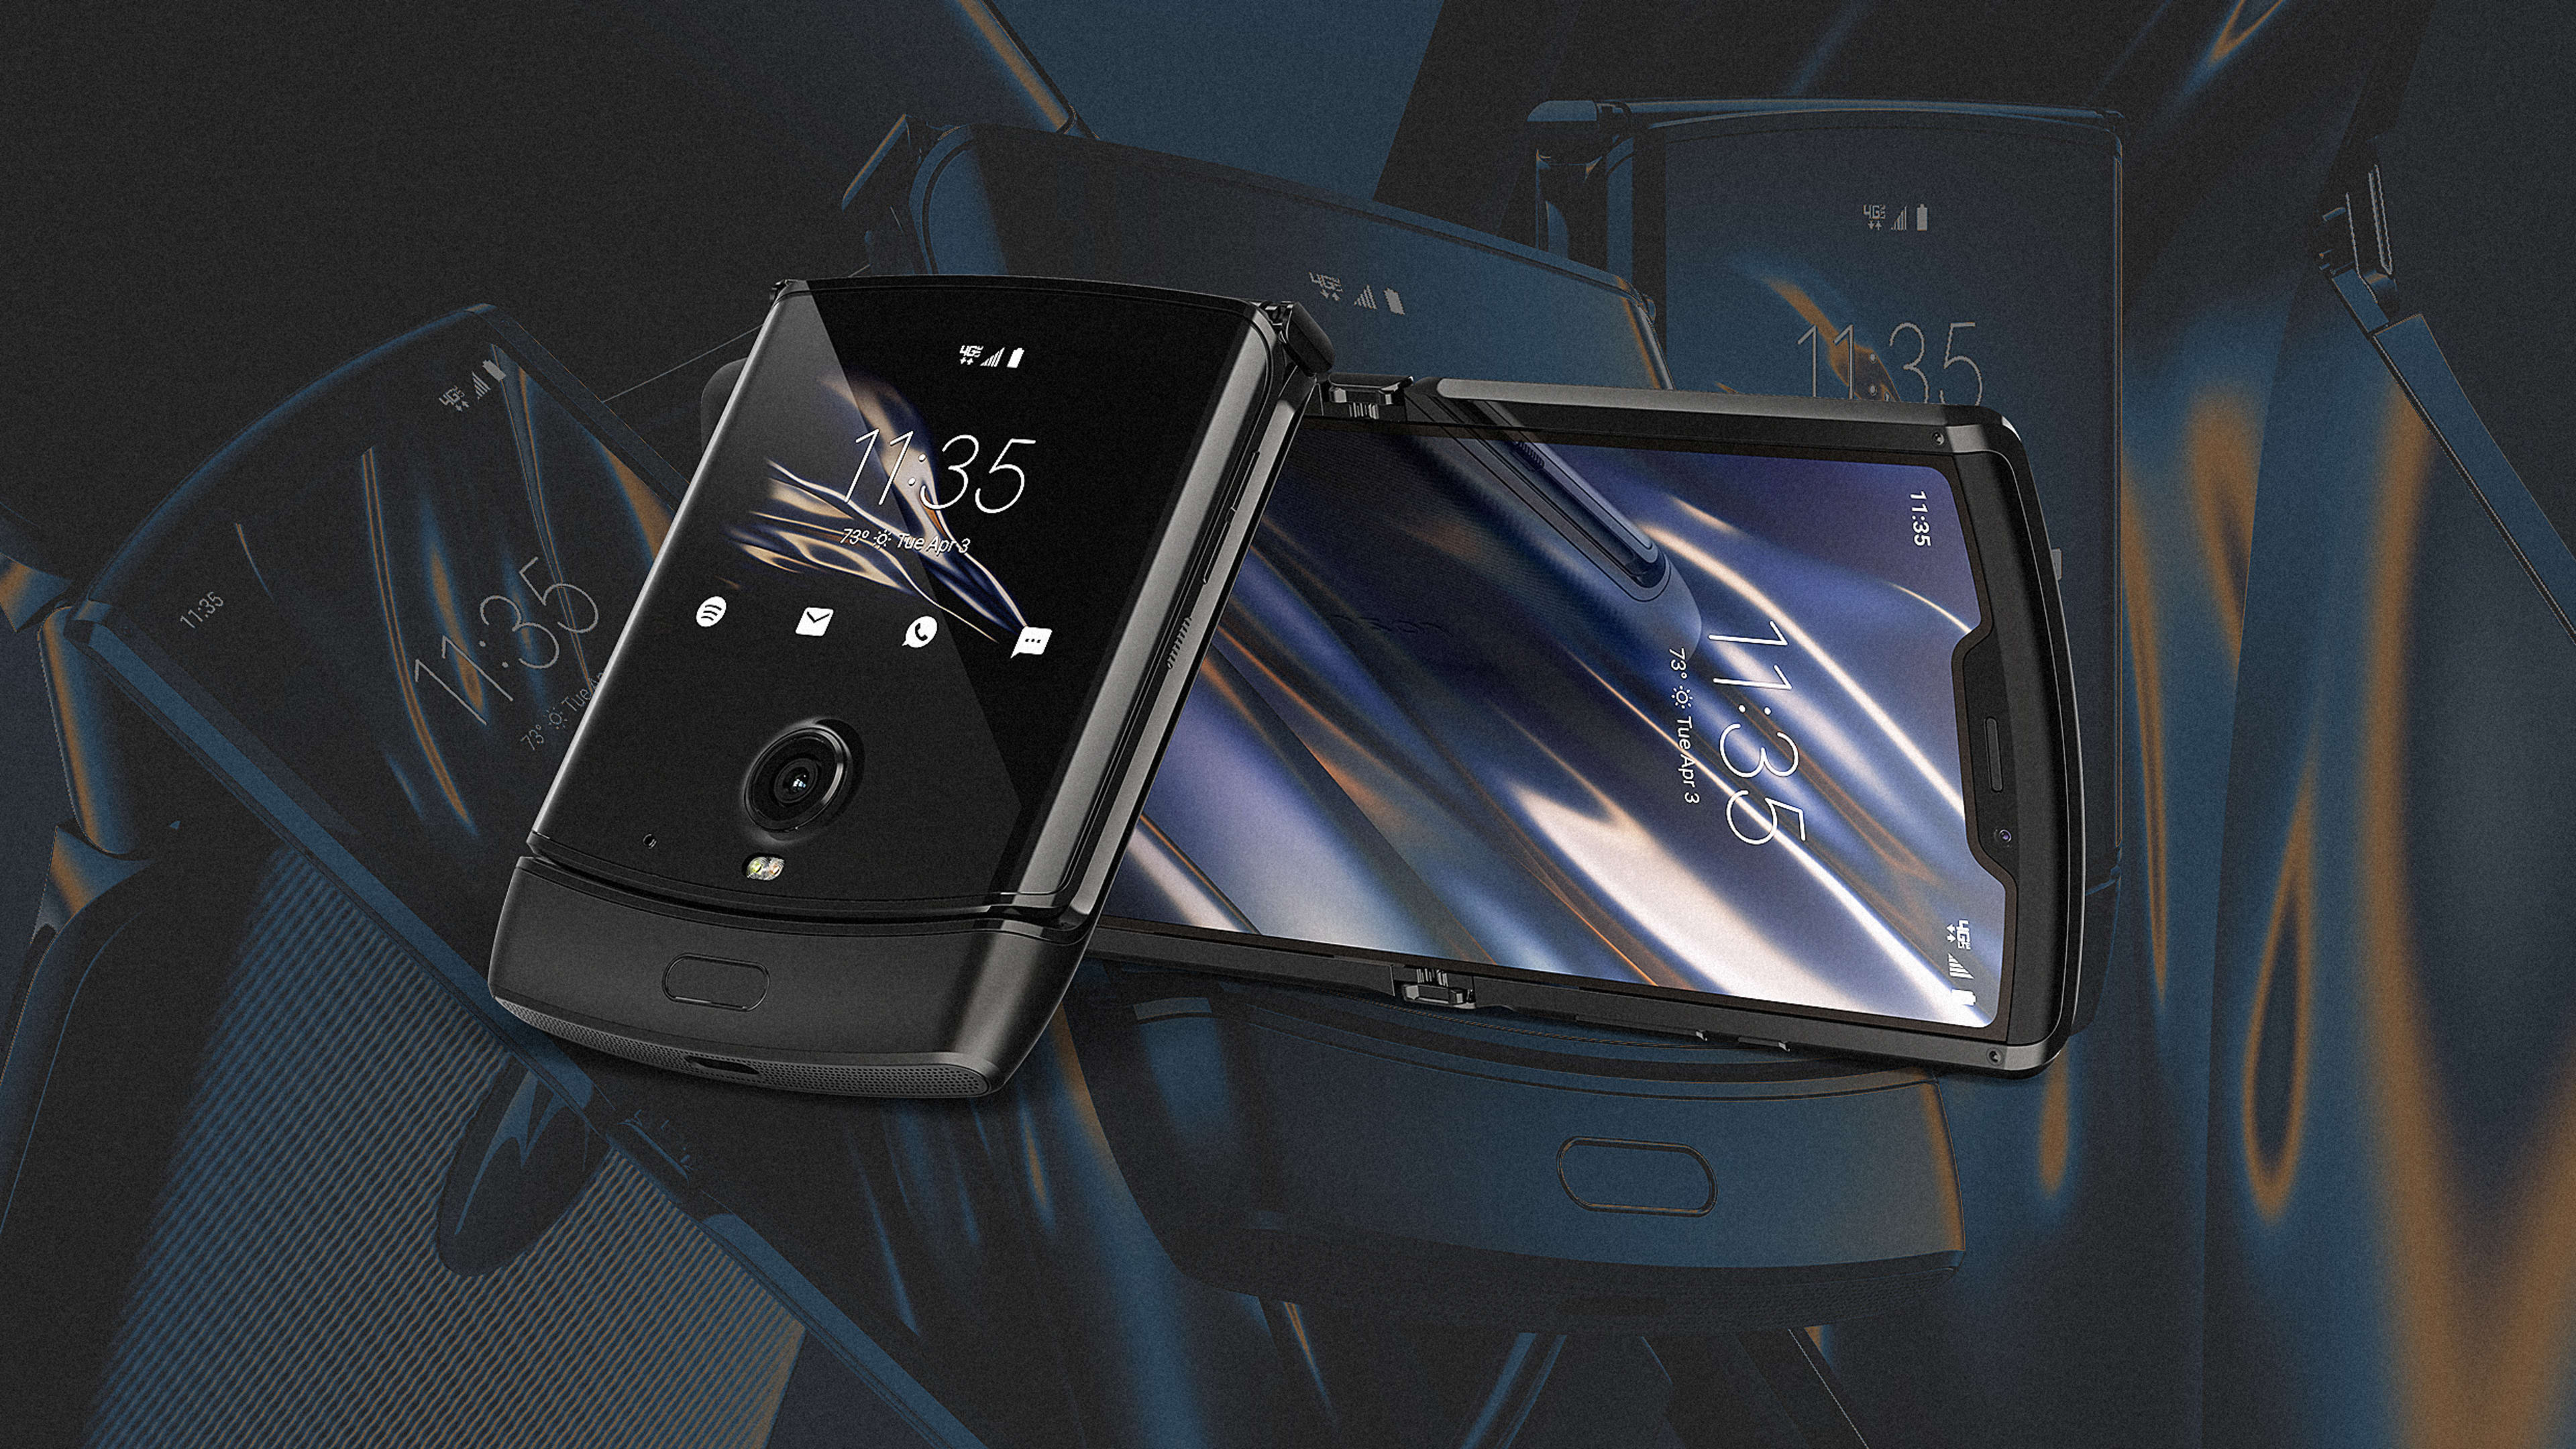 Motorola’s new folding Razr phone is a tantalizing glimpse of the post-iPhone era